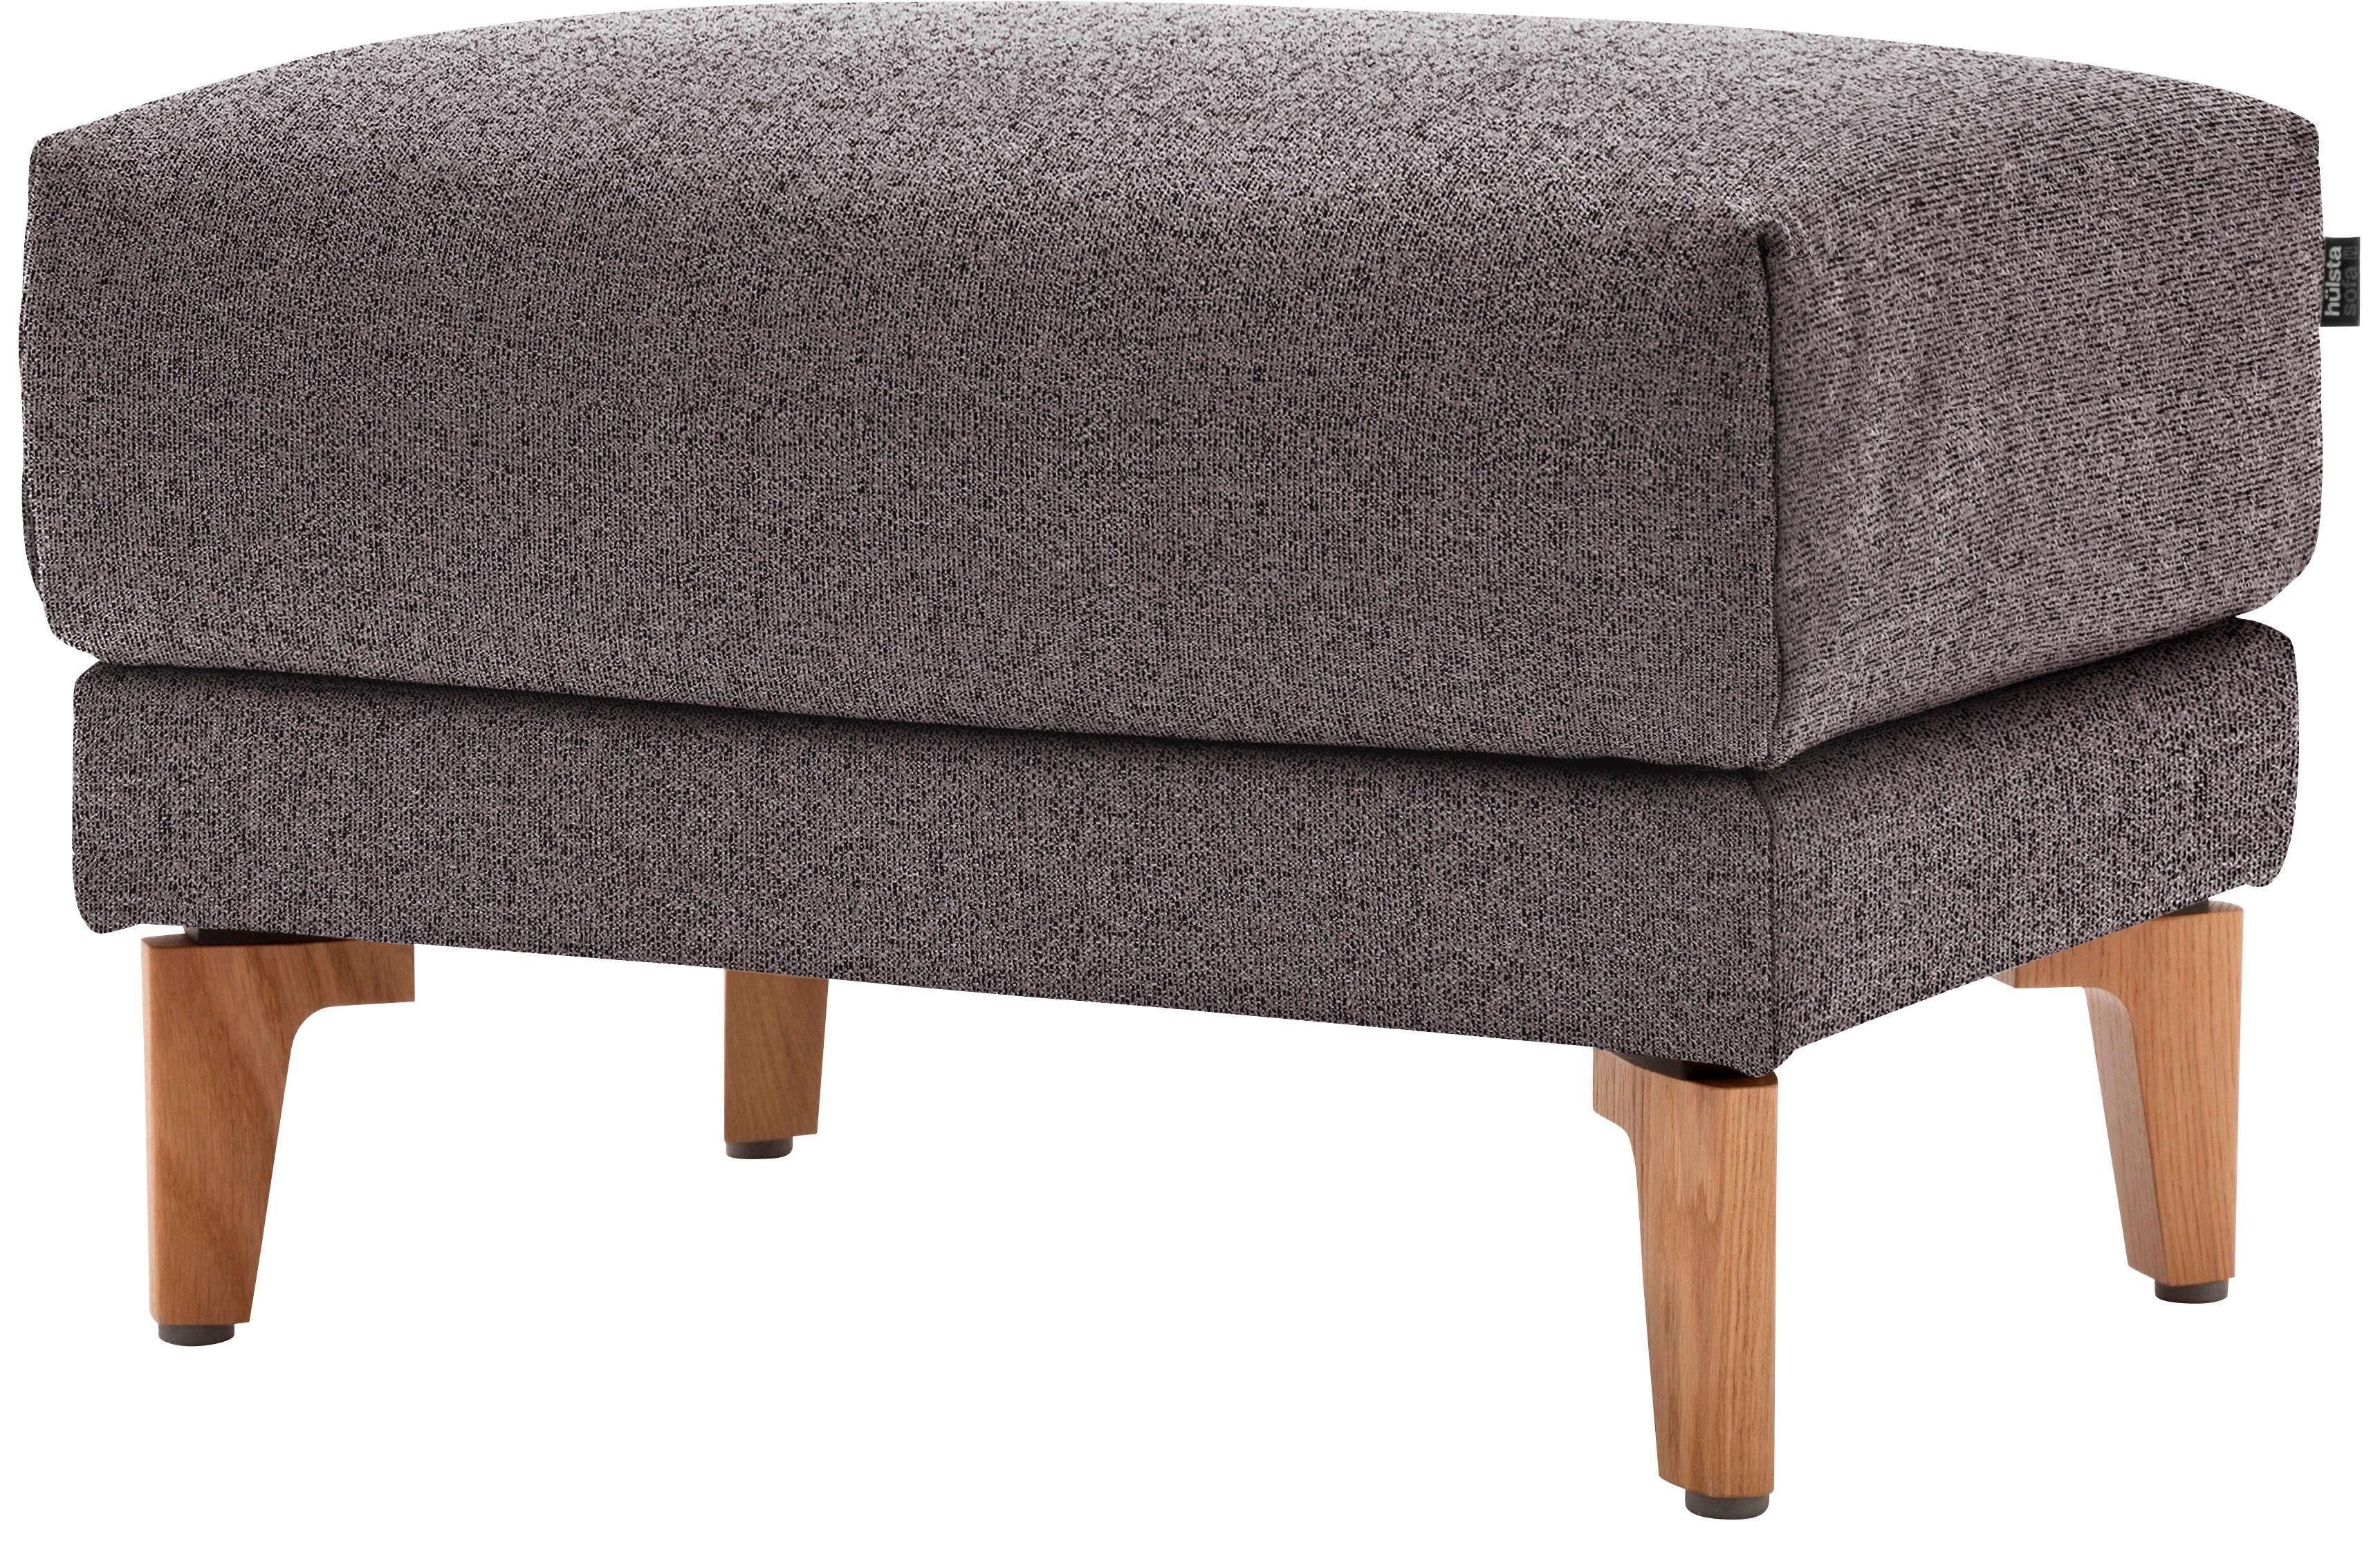 Füße Hocker Massivholz sofa hs.450, hülsta aus